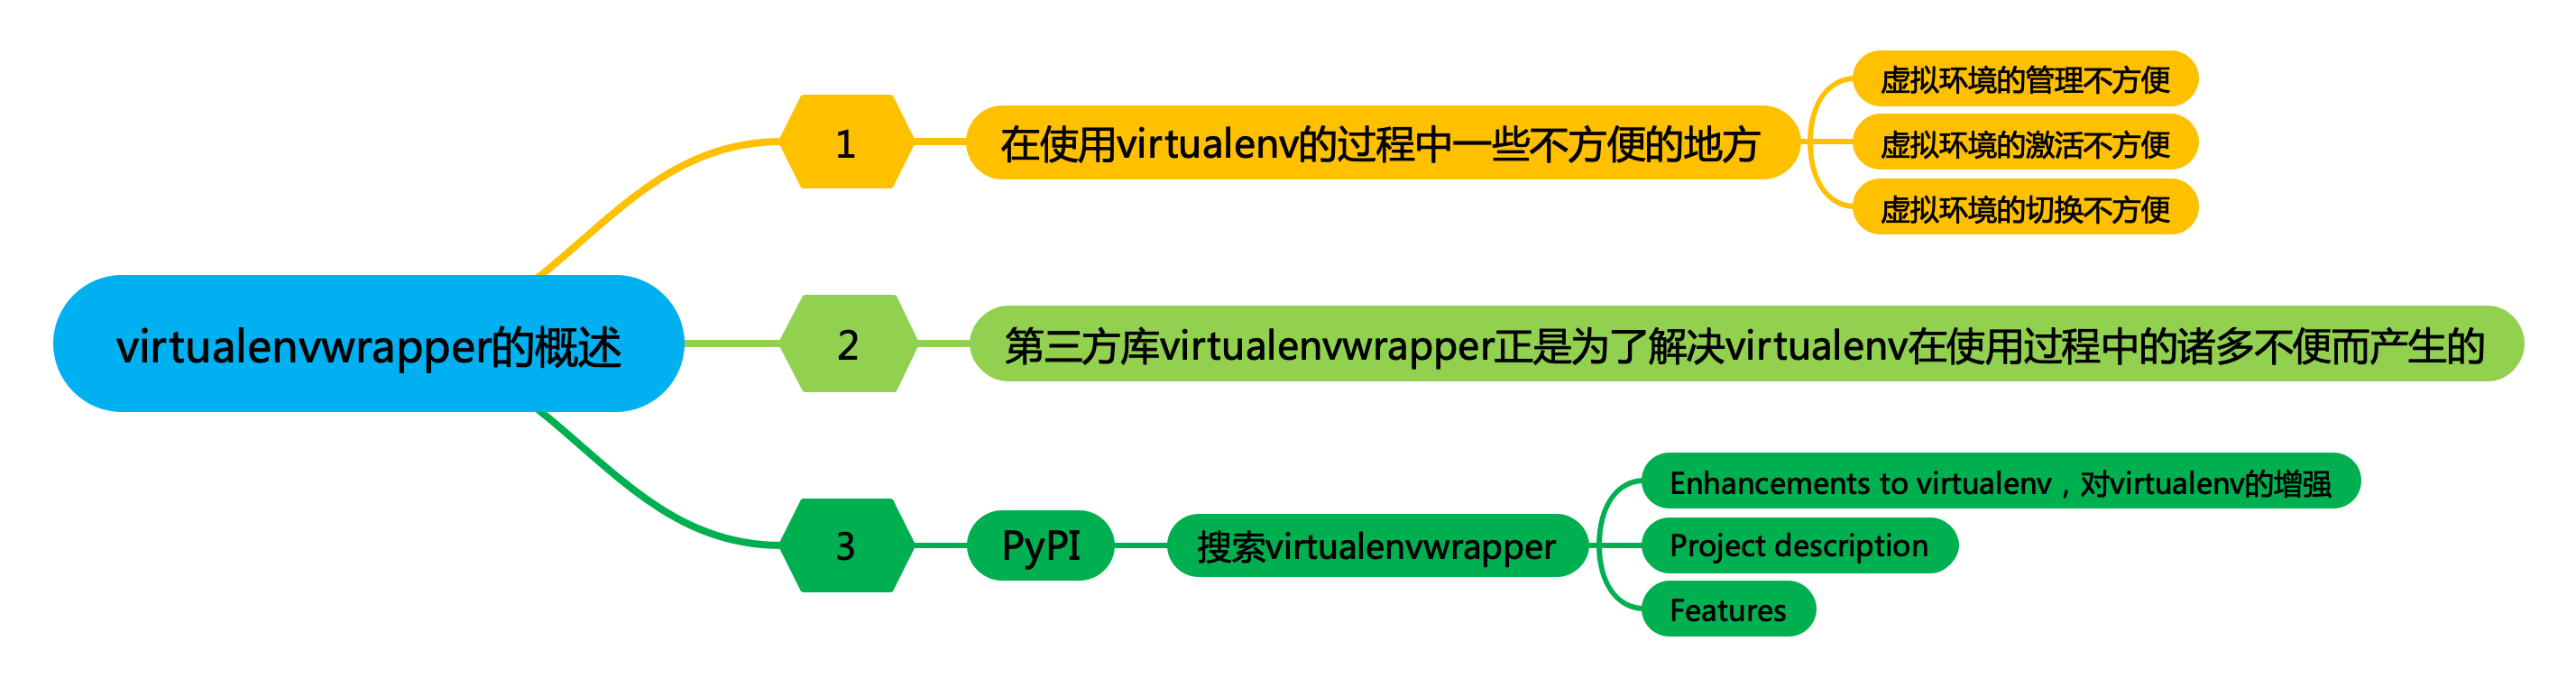 012_【virtualenvwrapper】virtualenvwrapper的概述.png